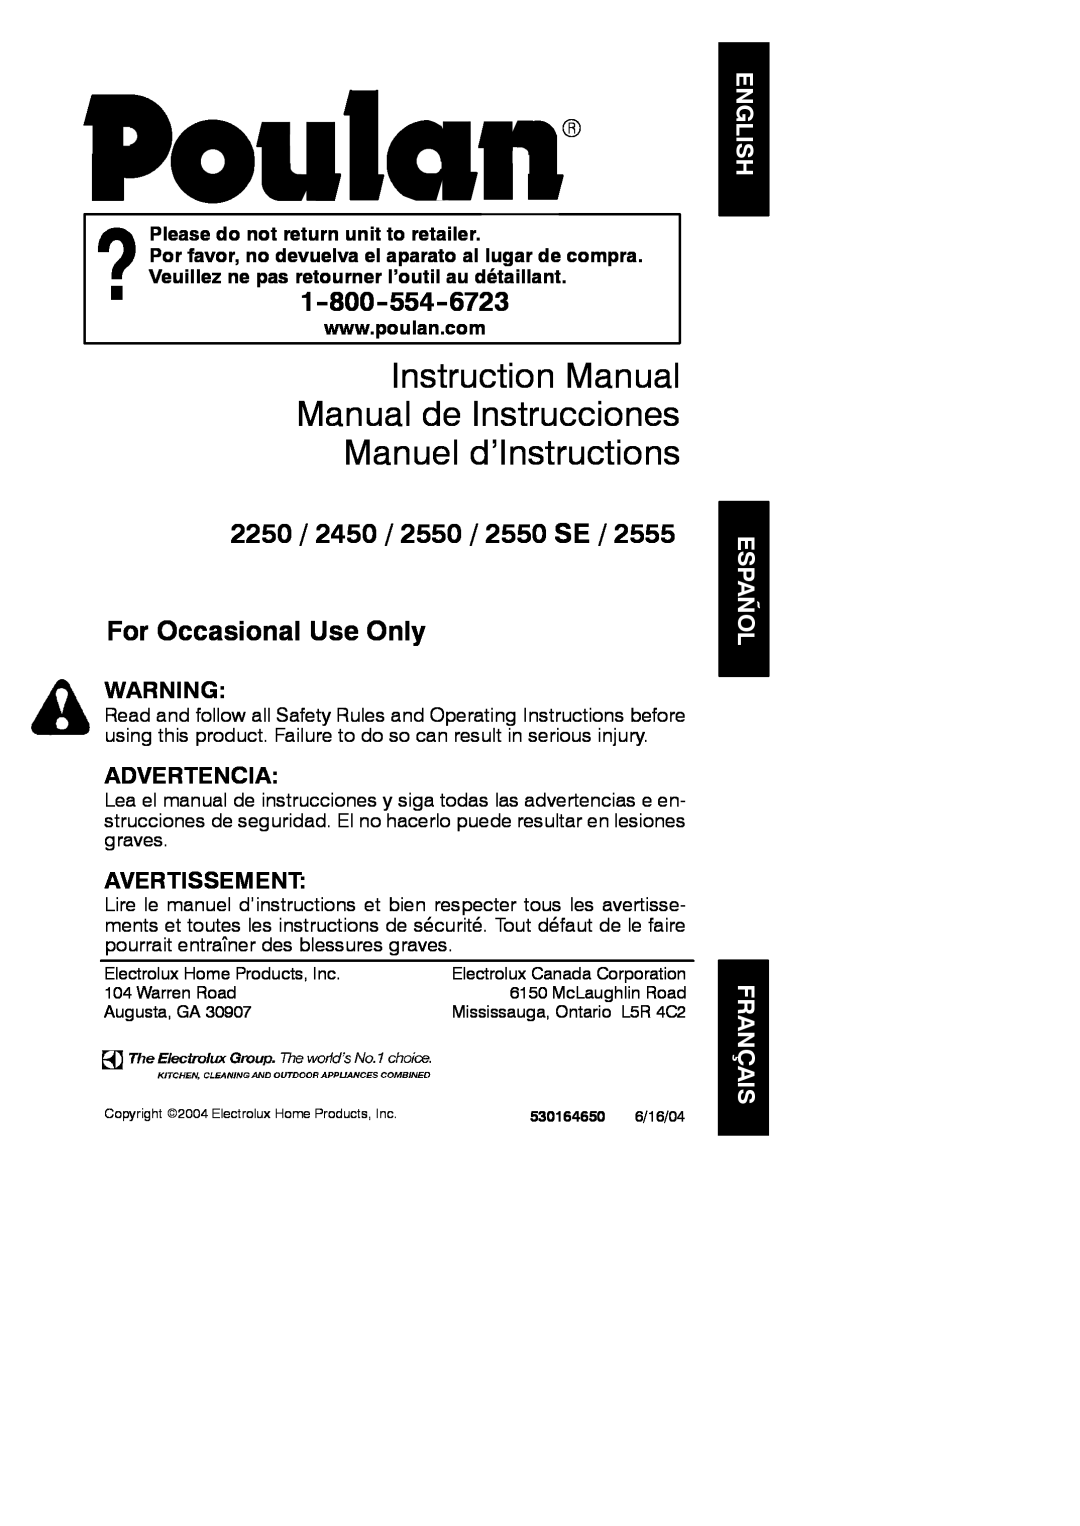 Poulan 530164650 instruction manual English Español Français, 2250 / 2450 / 2550 / 2550 SE For Occasional Use Only 